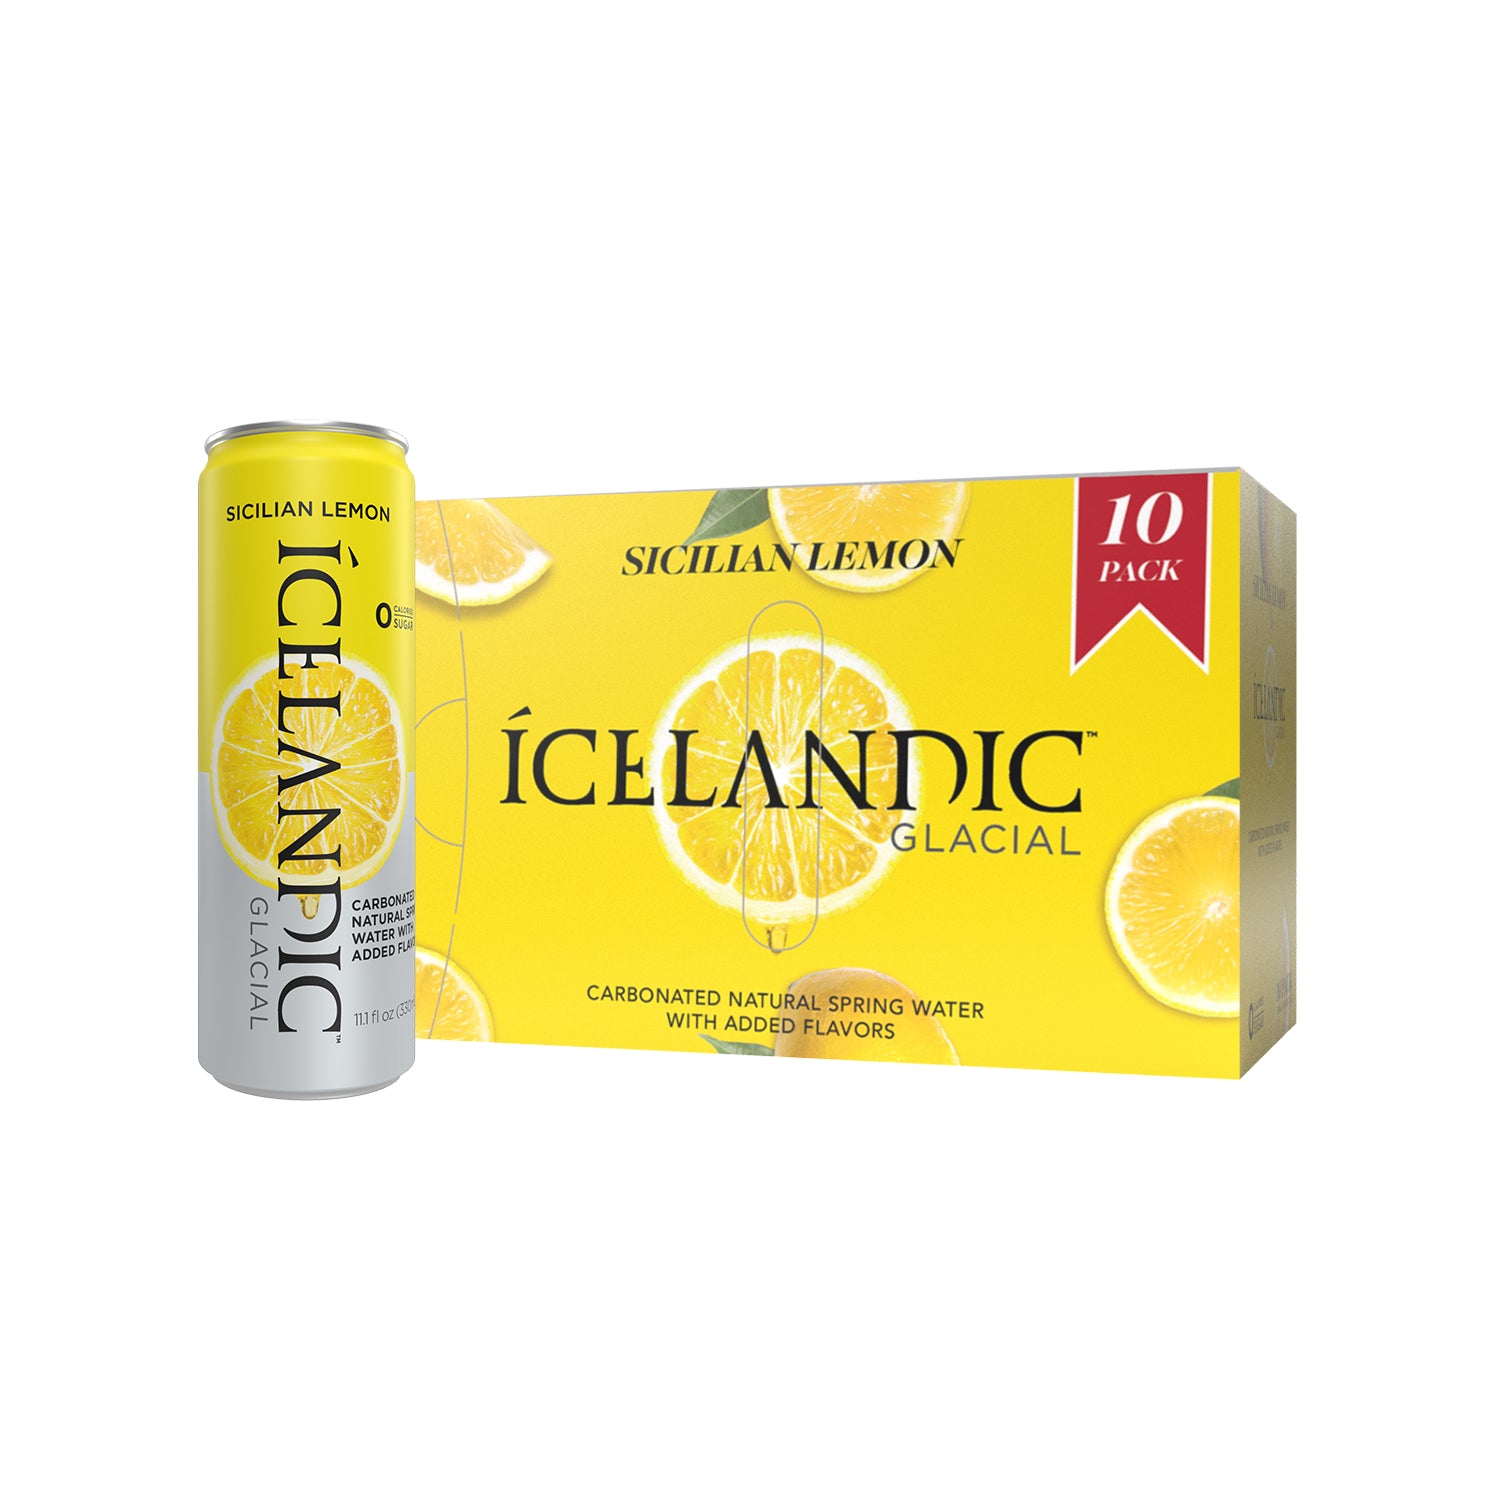 Icelandic Glacial Sparkling Sicilian Lemon Water in Aluminum Cans (10 pack) - Icelandic Glacial